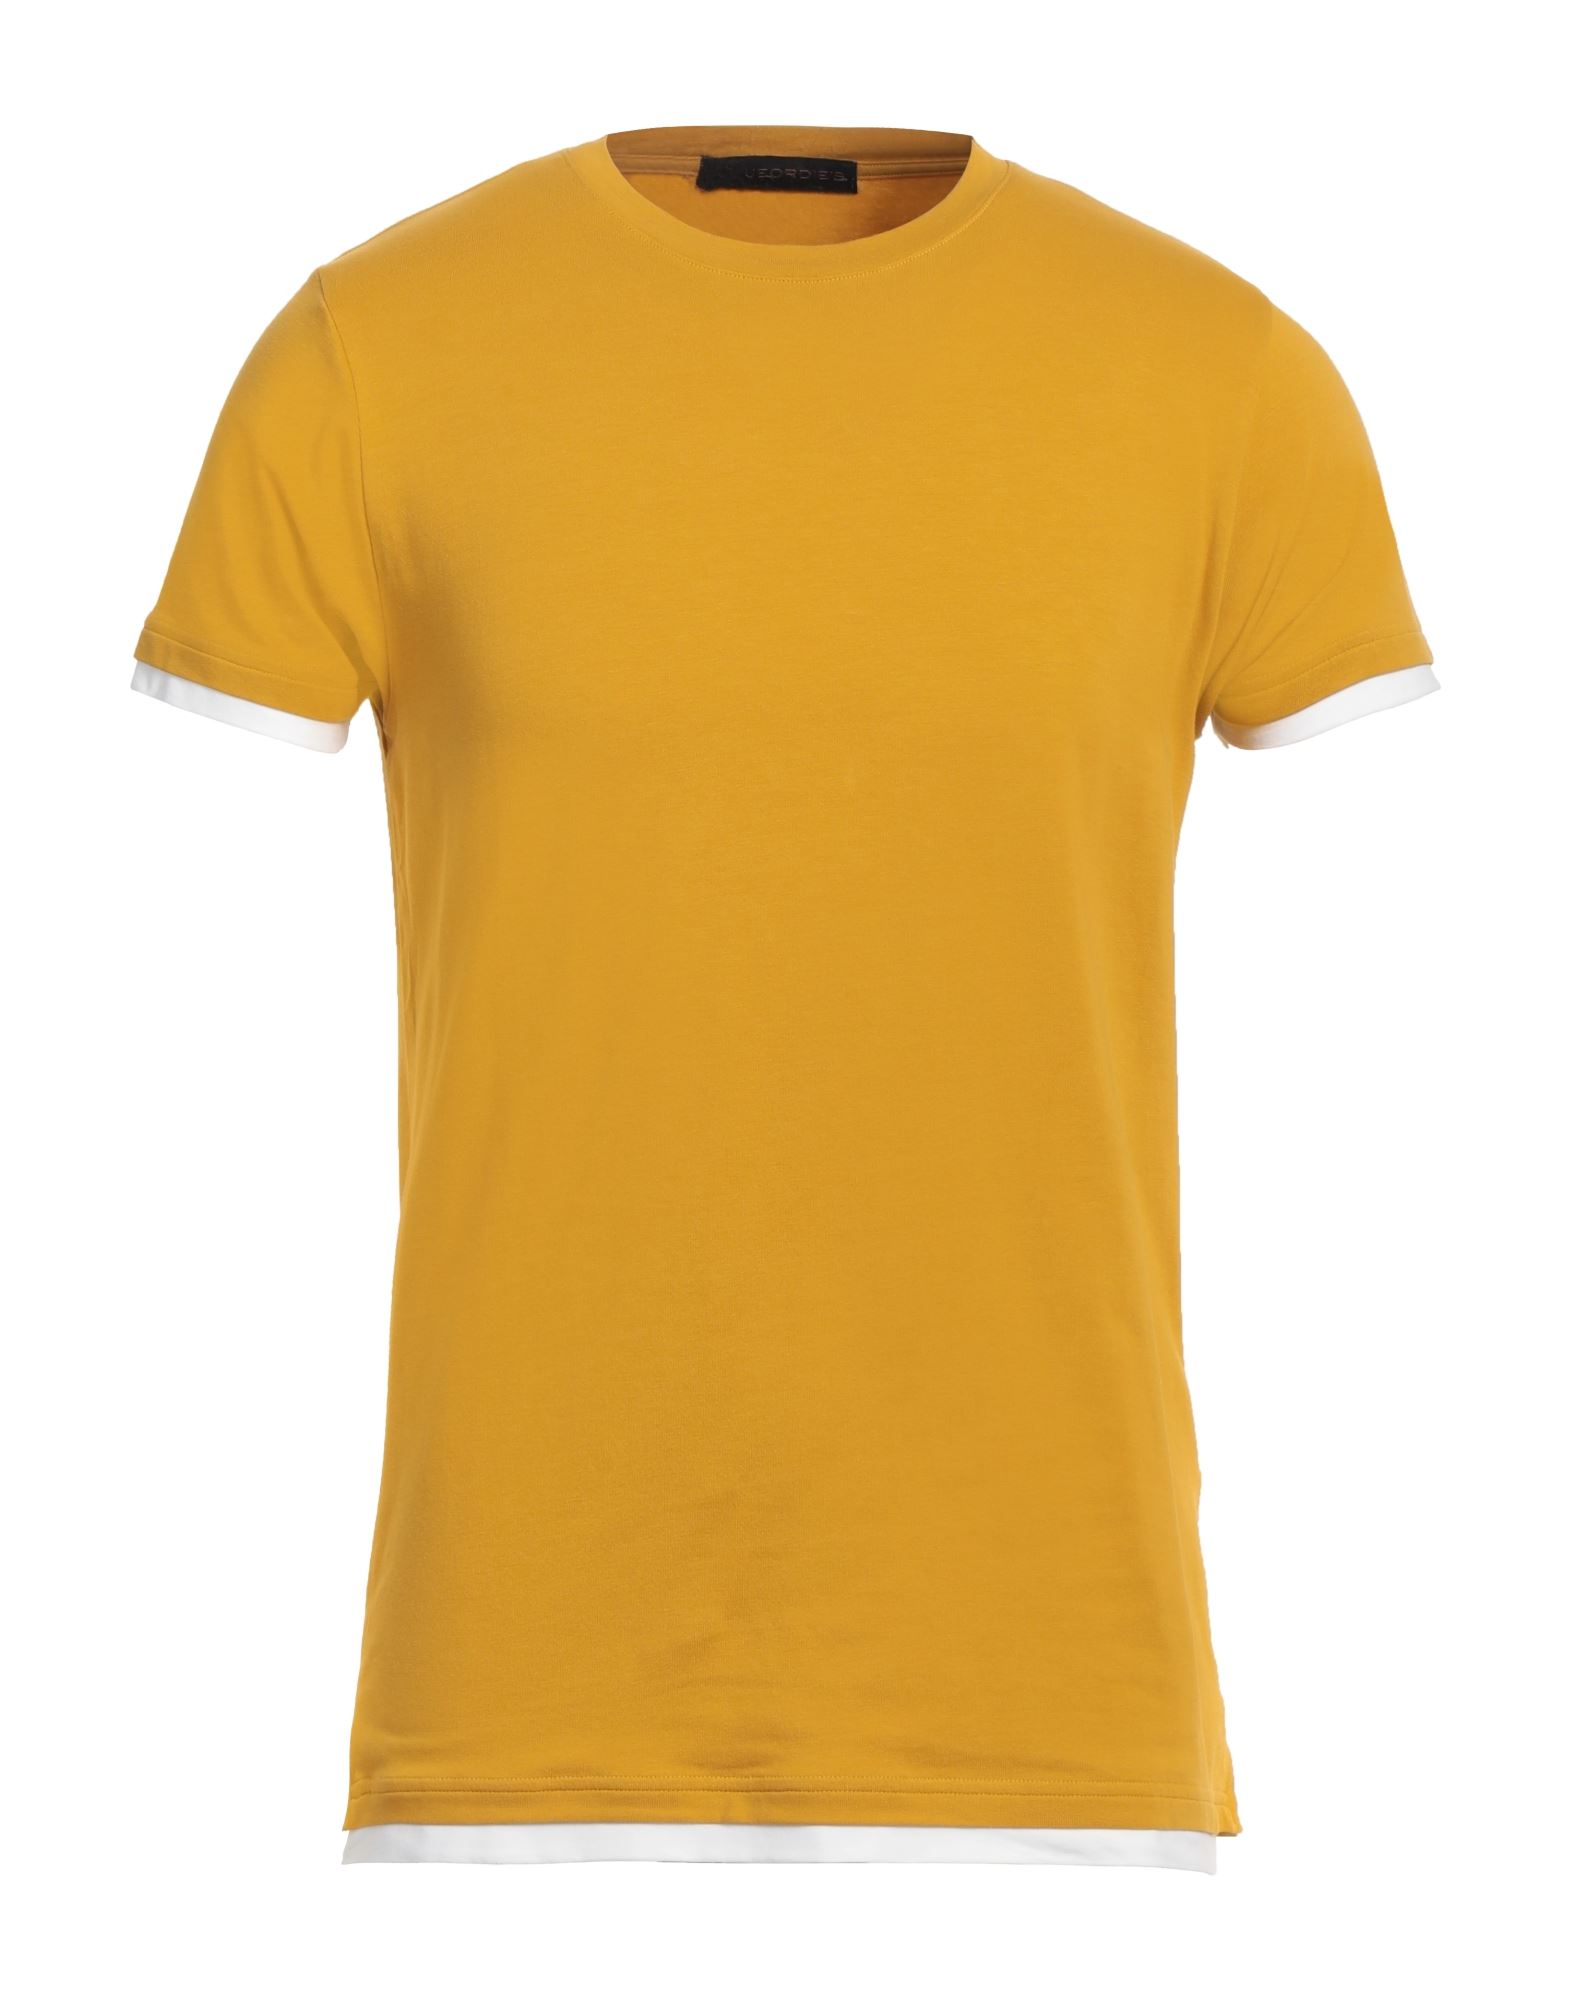 Jeordie's Man T-shirt Mustard Size M Cotton, Elastane In Yellow